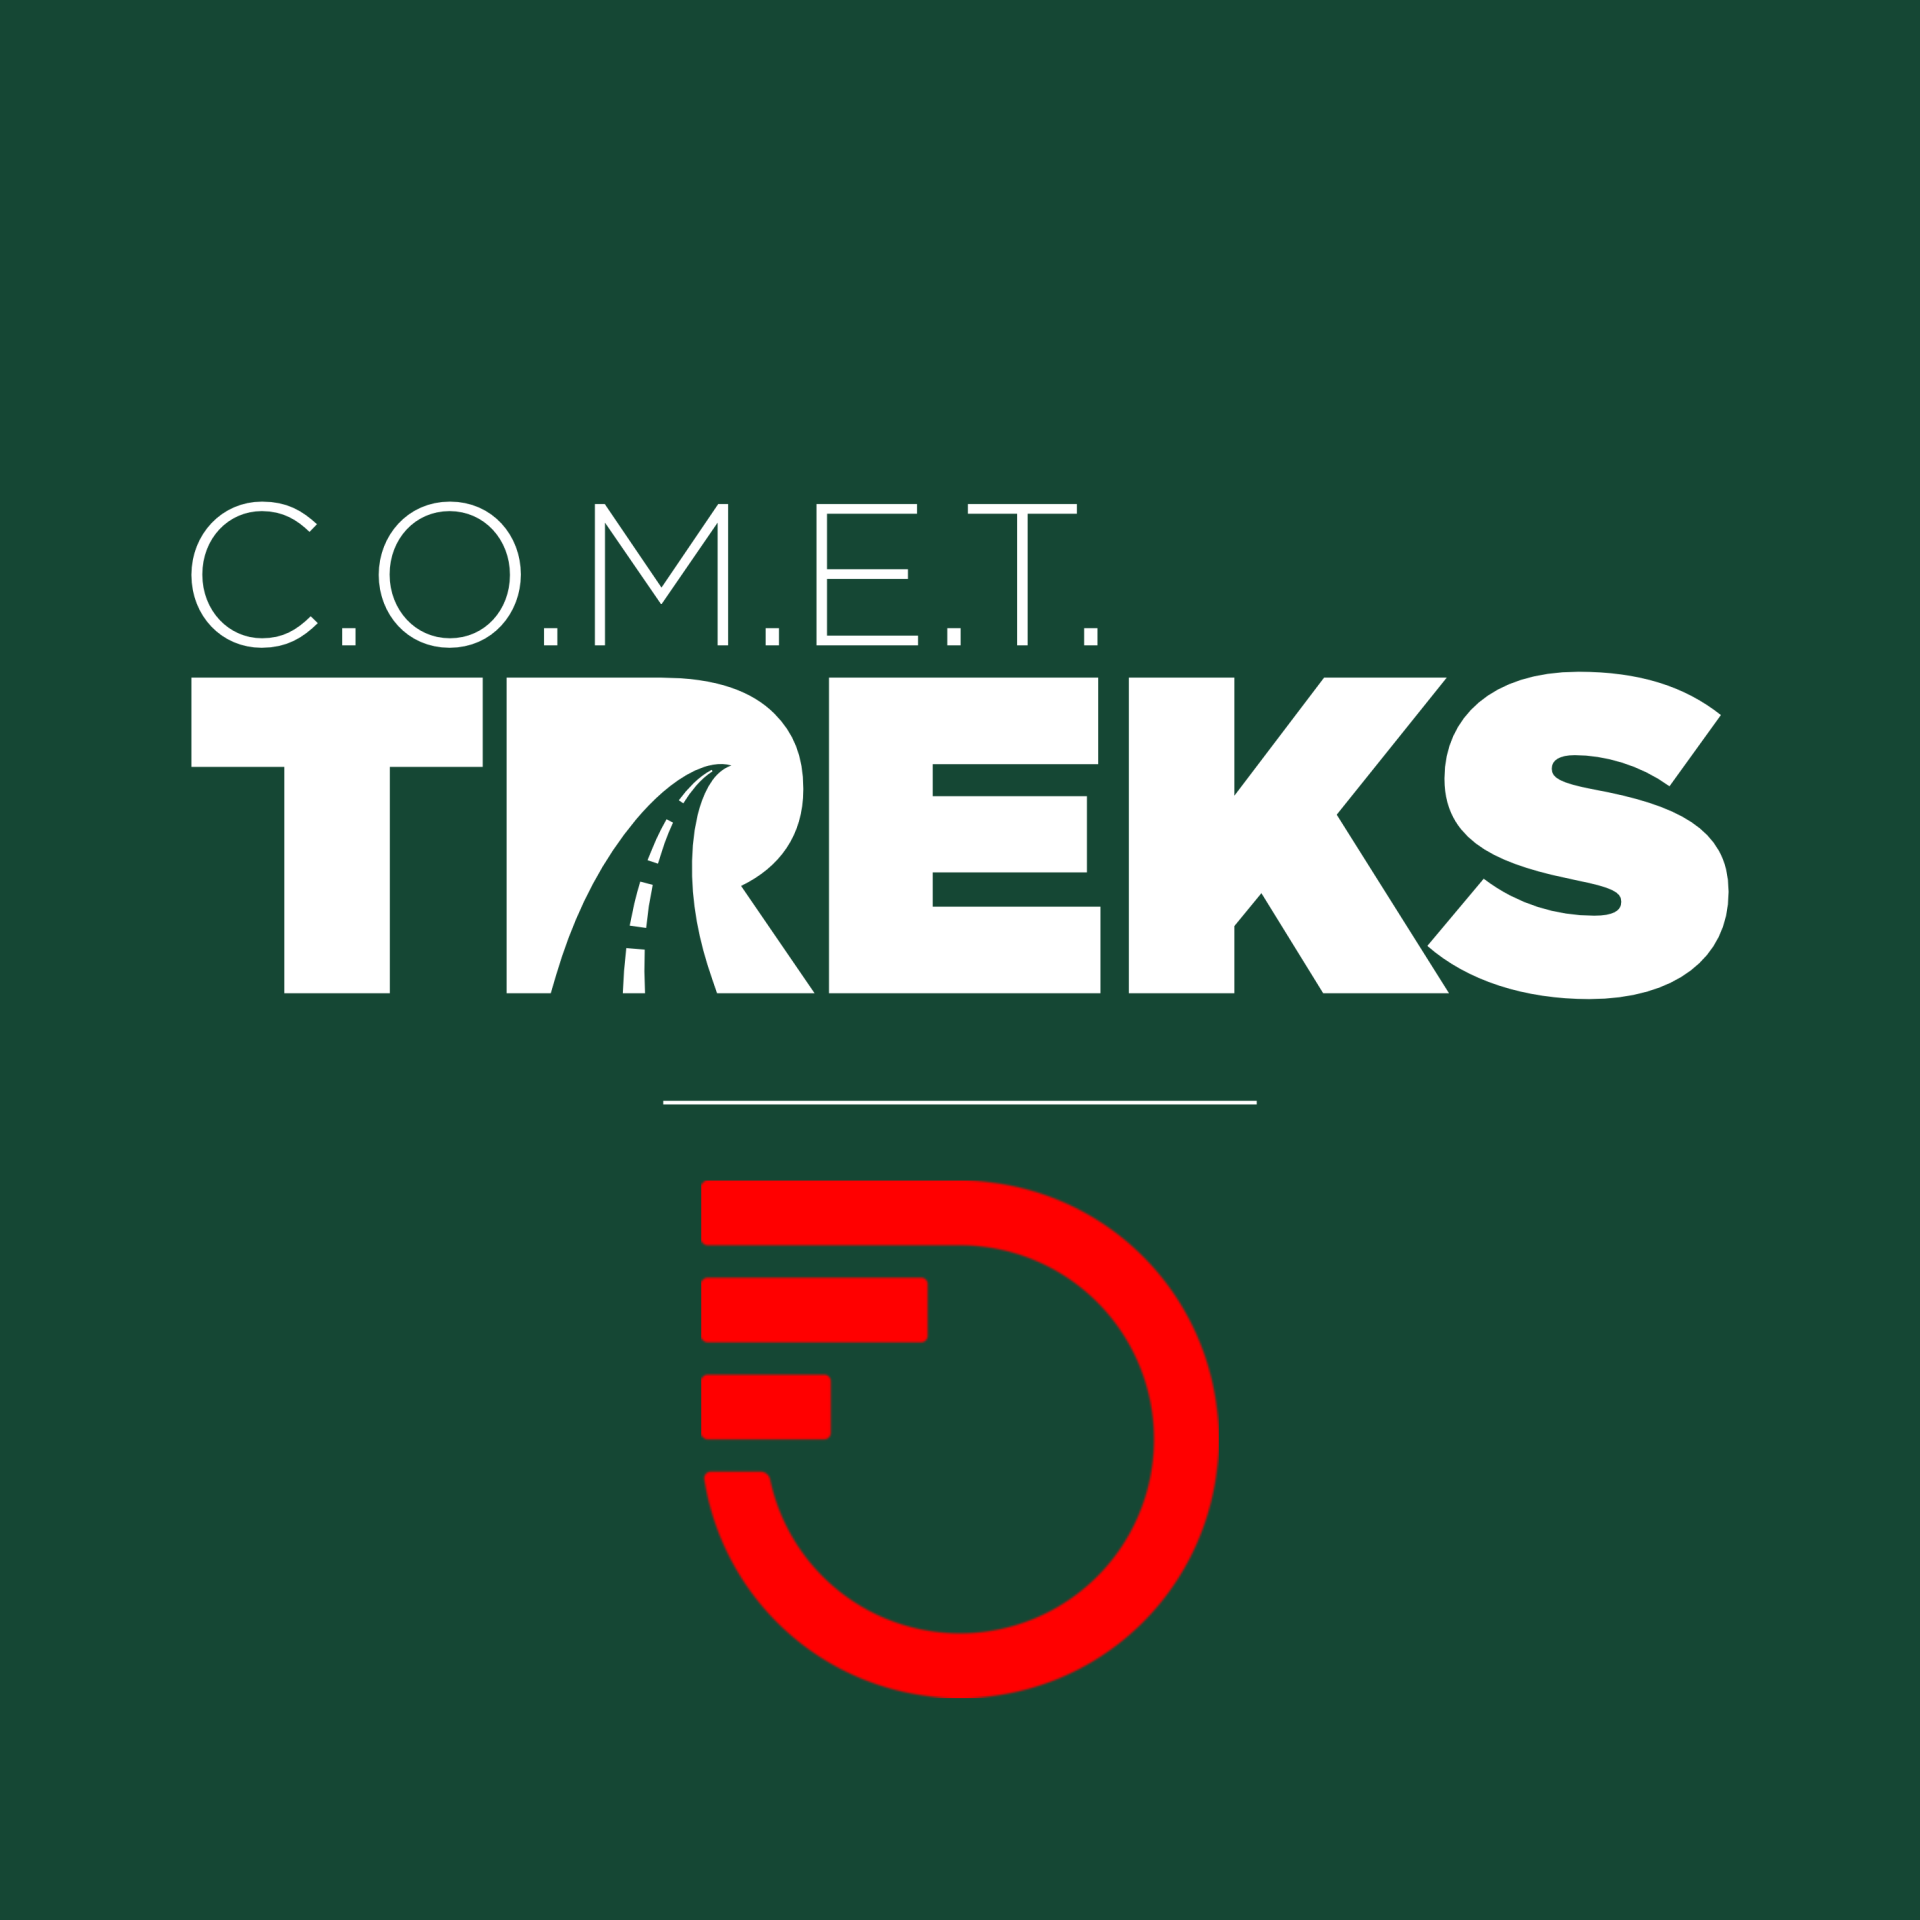 C.O.M.E.T. TREKS with Frontier Communications logo